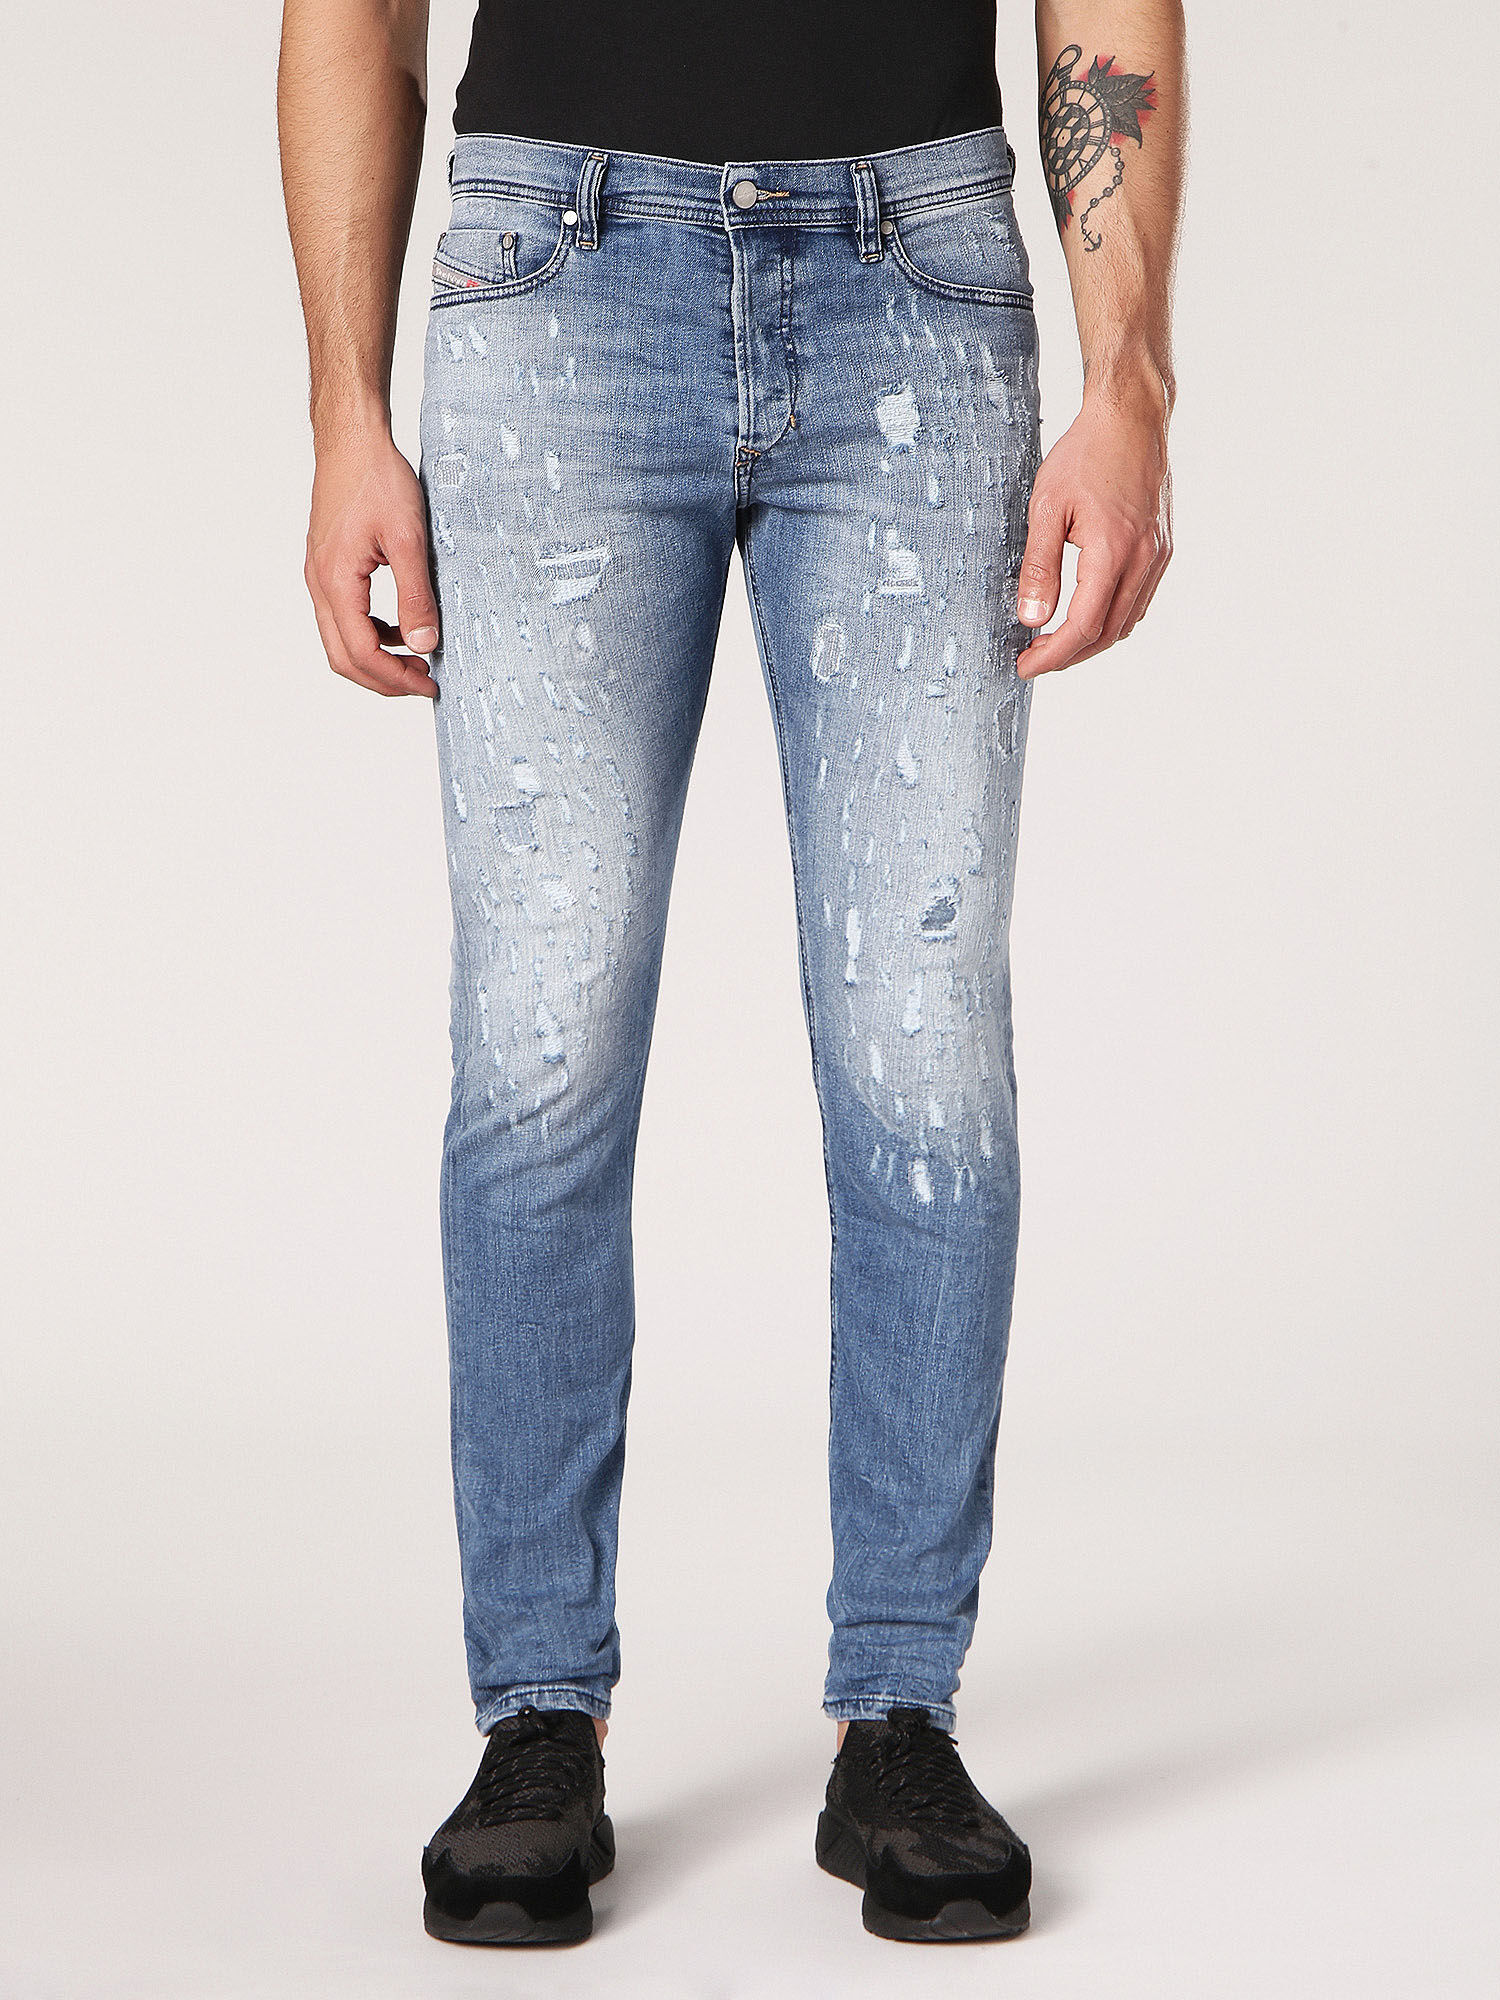 mens skinny jeans size 44